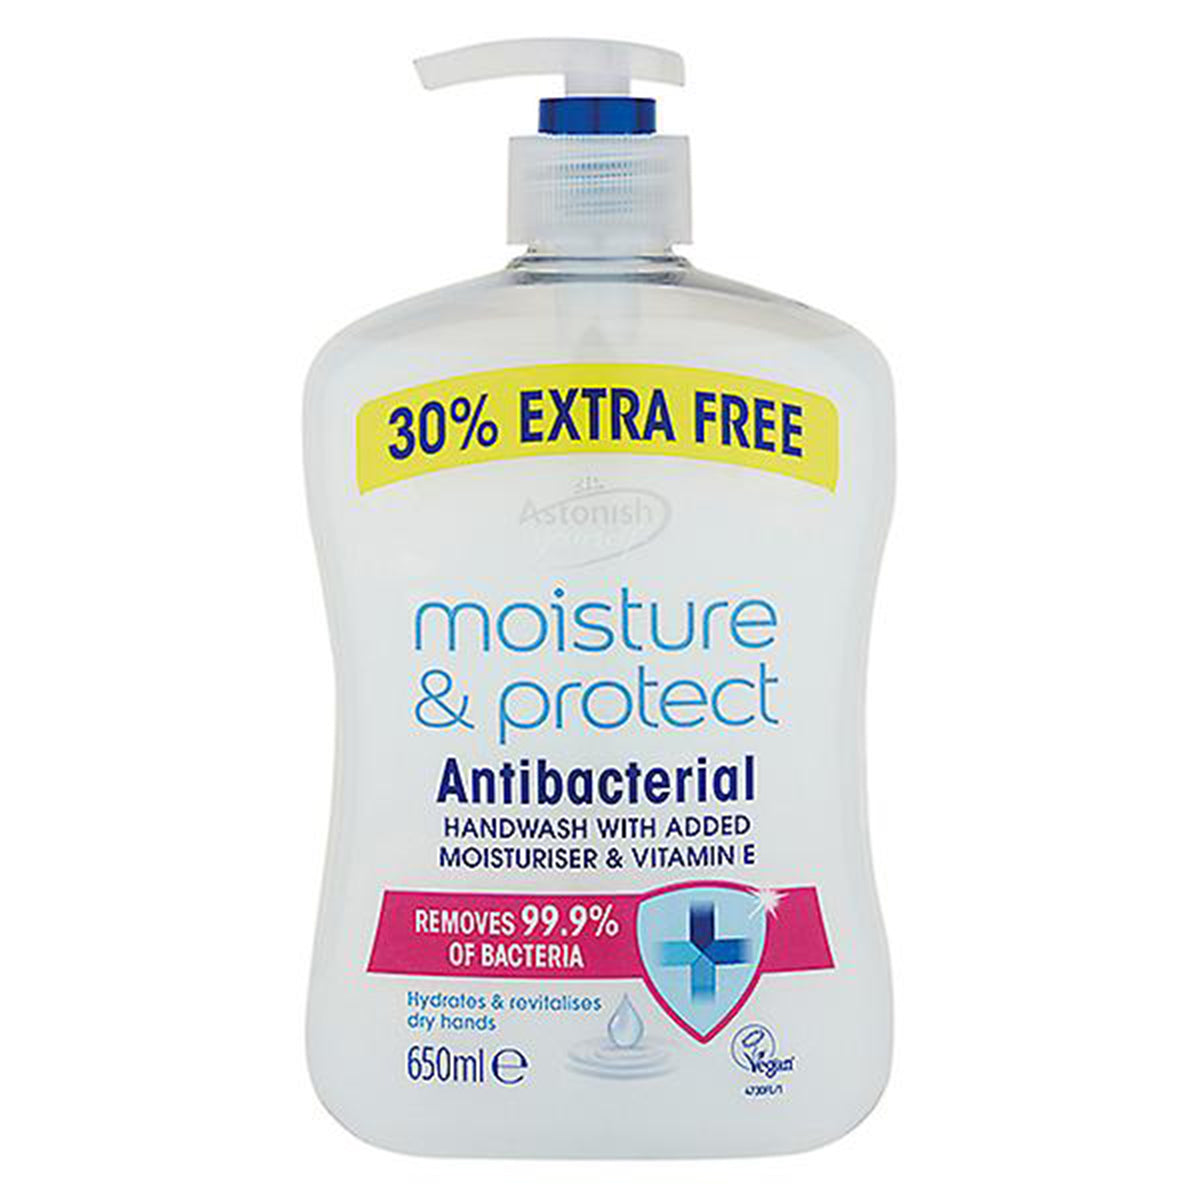 Astonish Moisture & Protecy Antibacterial Handwash - 650ml - Continental Food Store